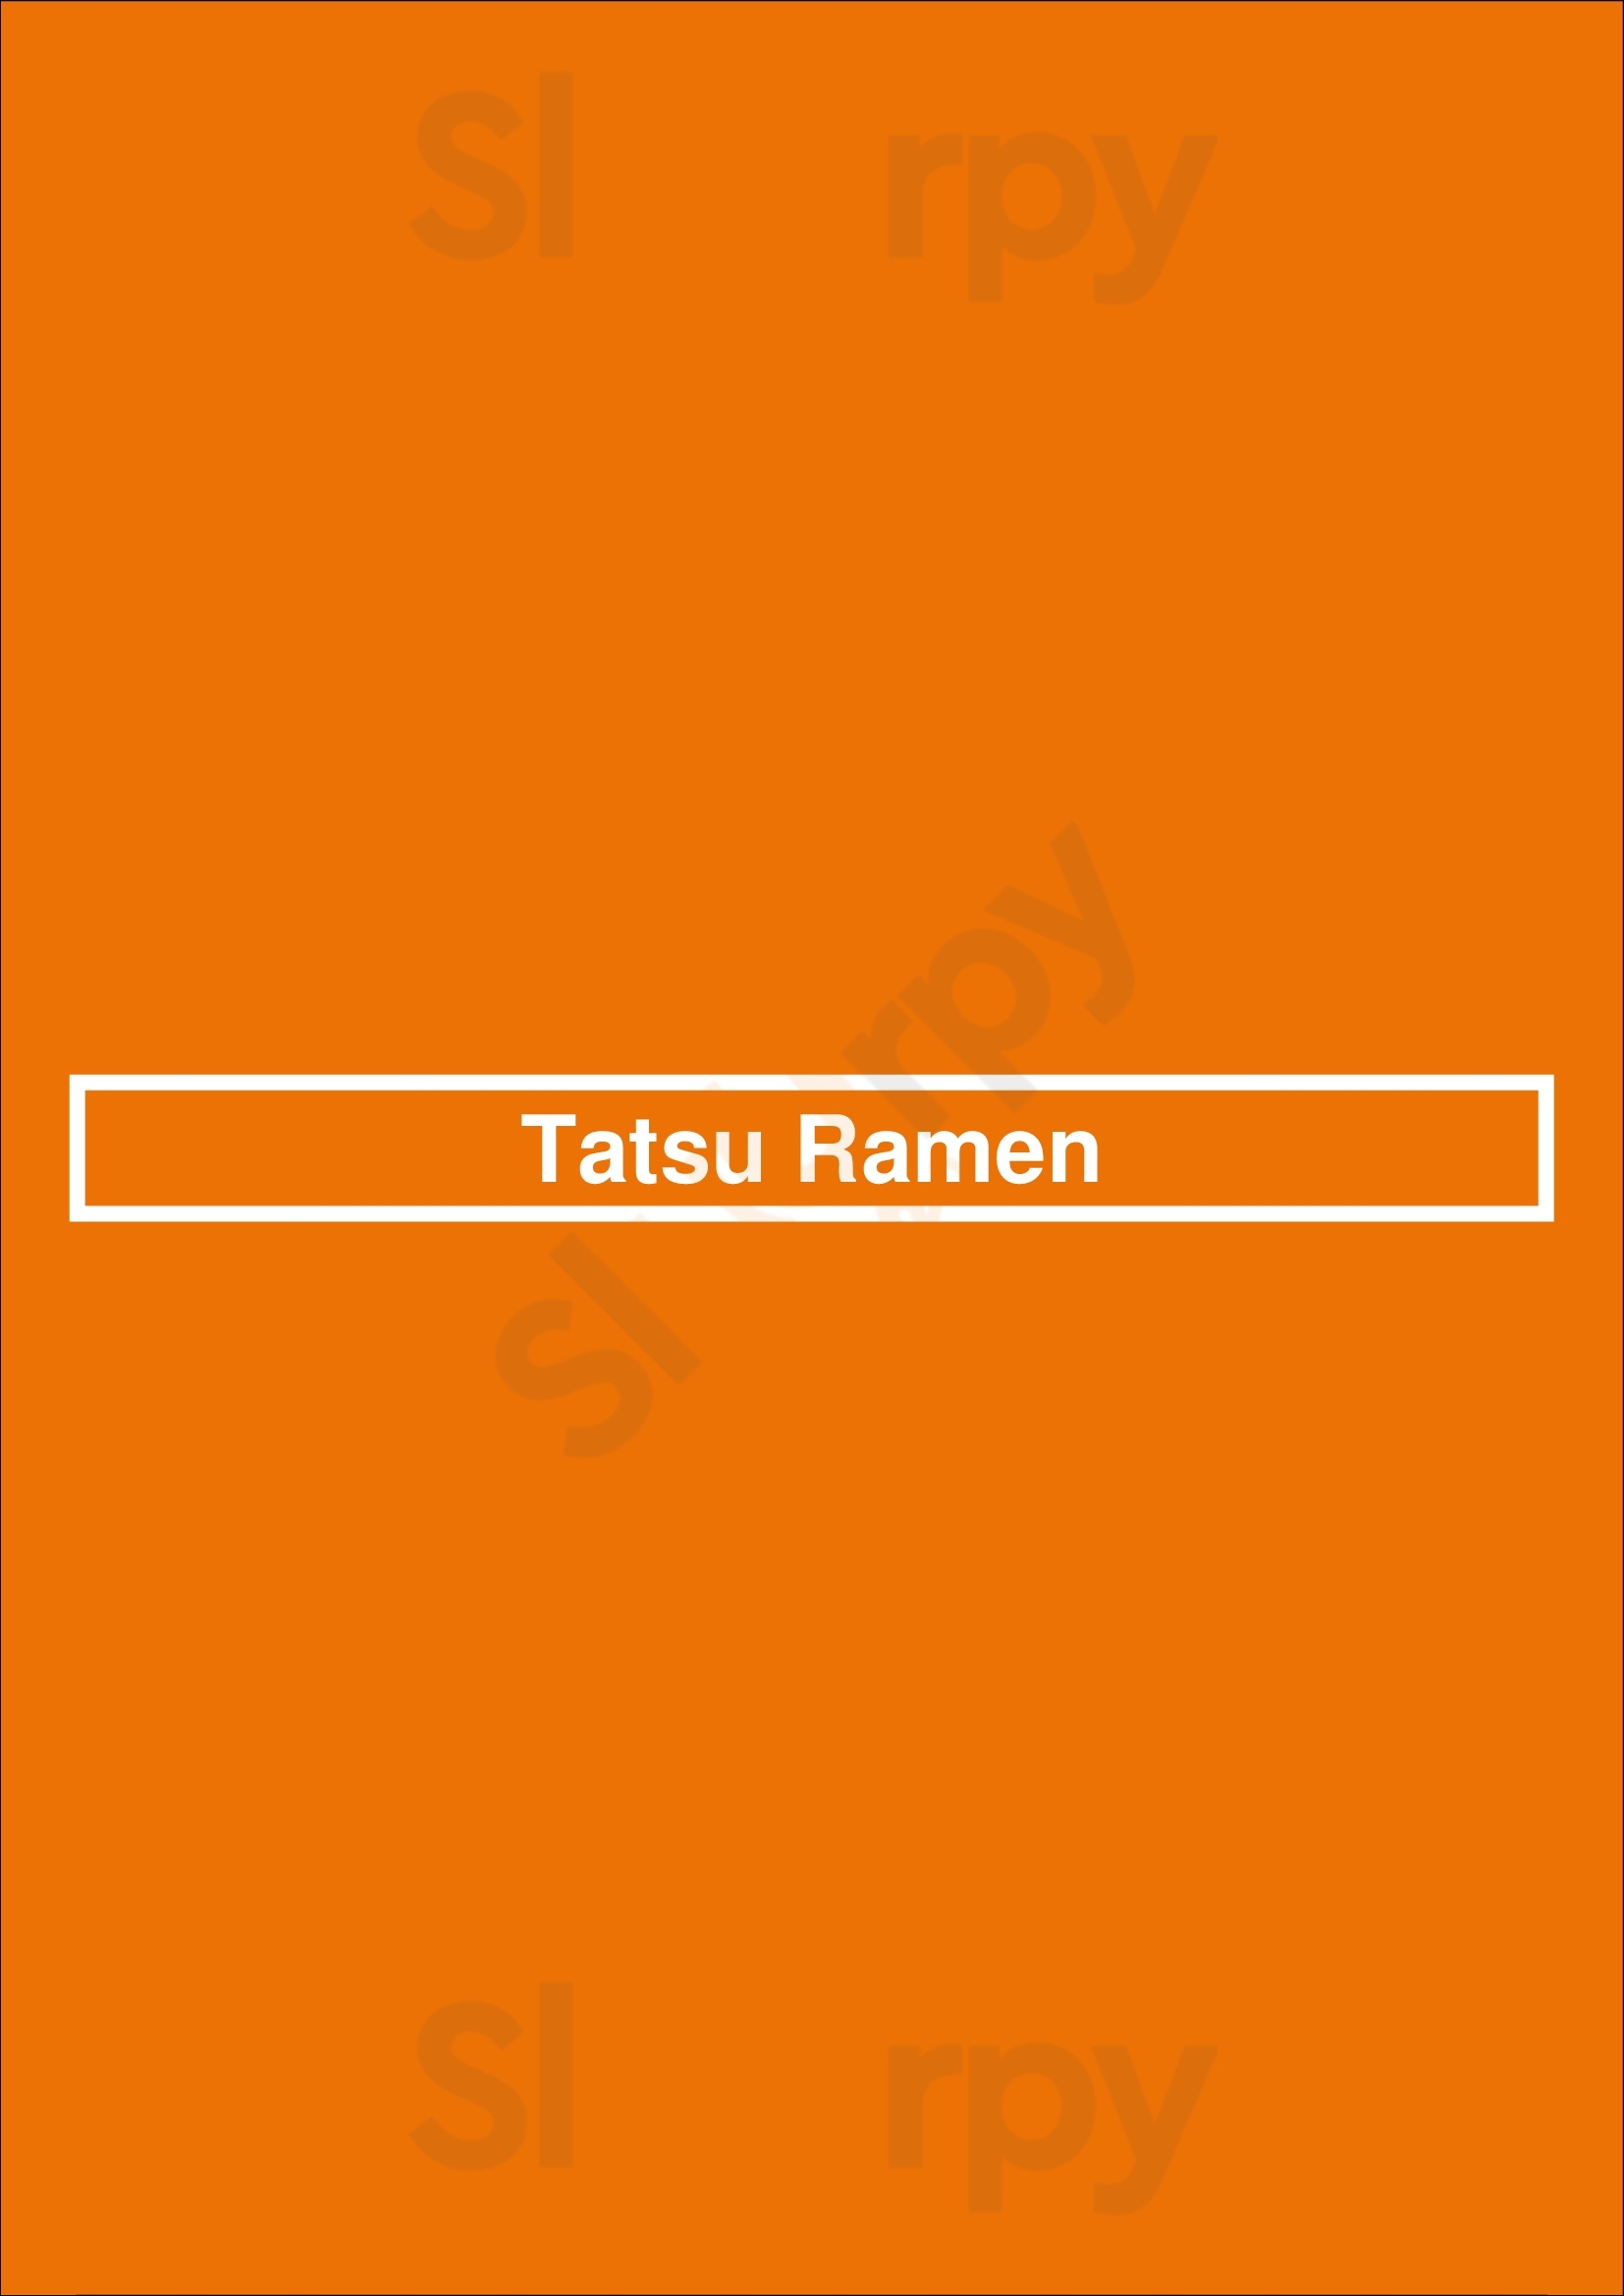 Tatsu Ramen Los Angeles Menu - 1